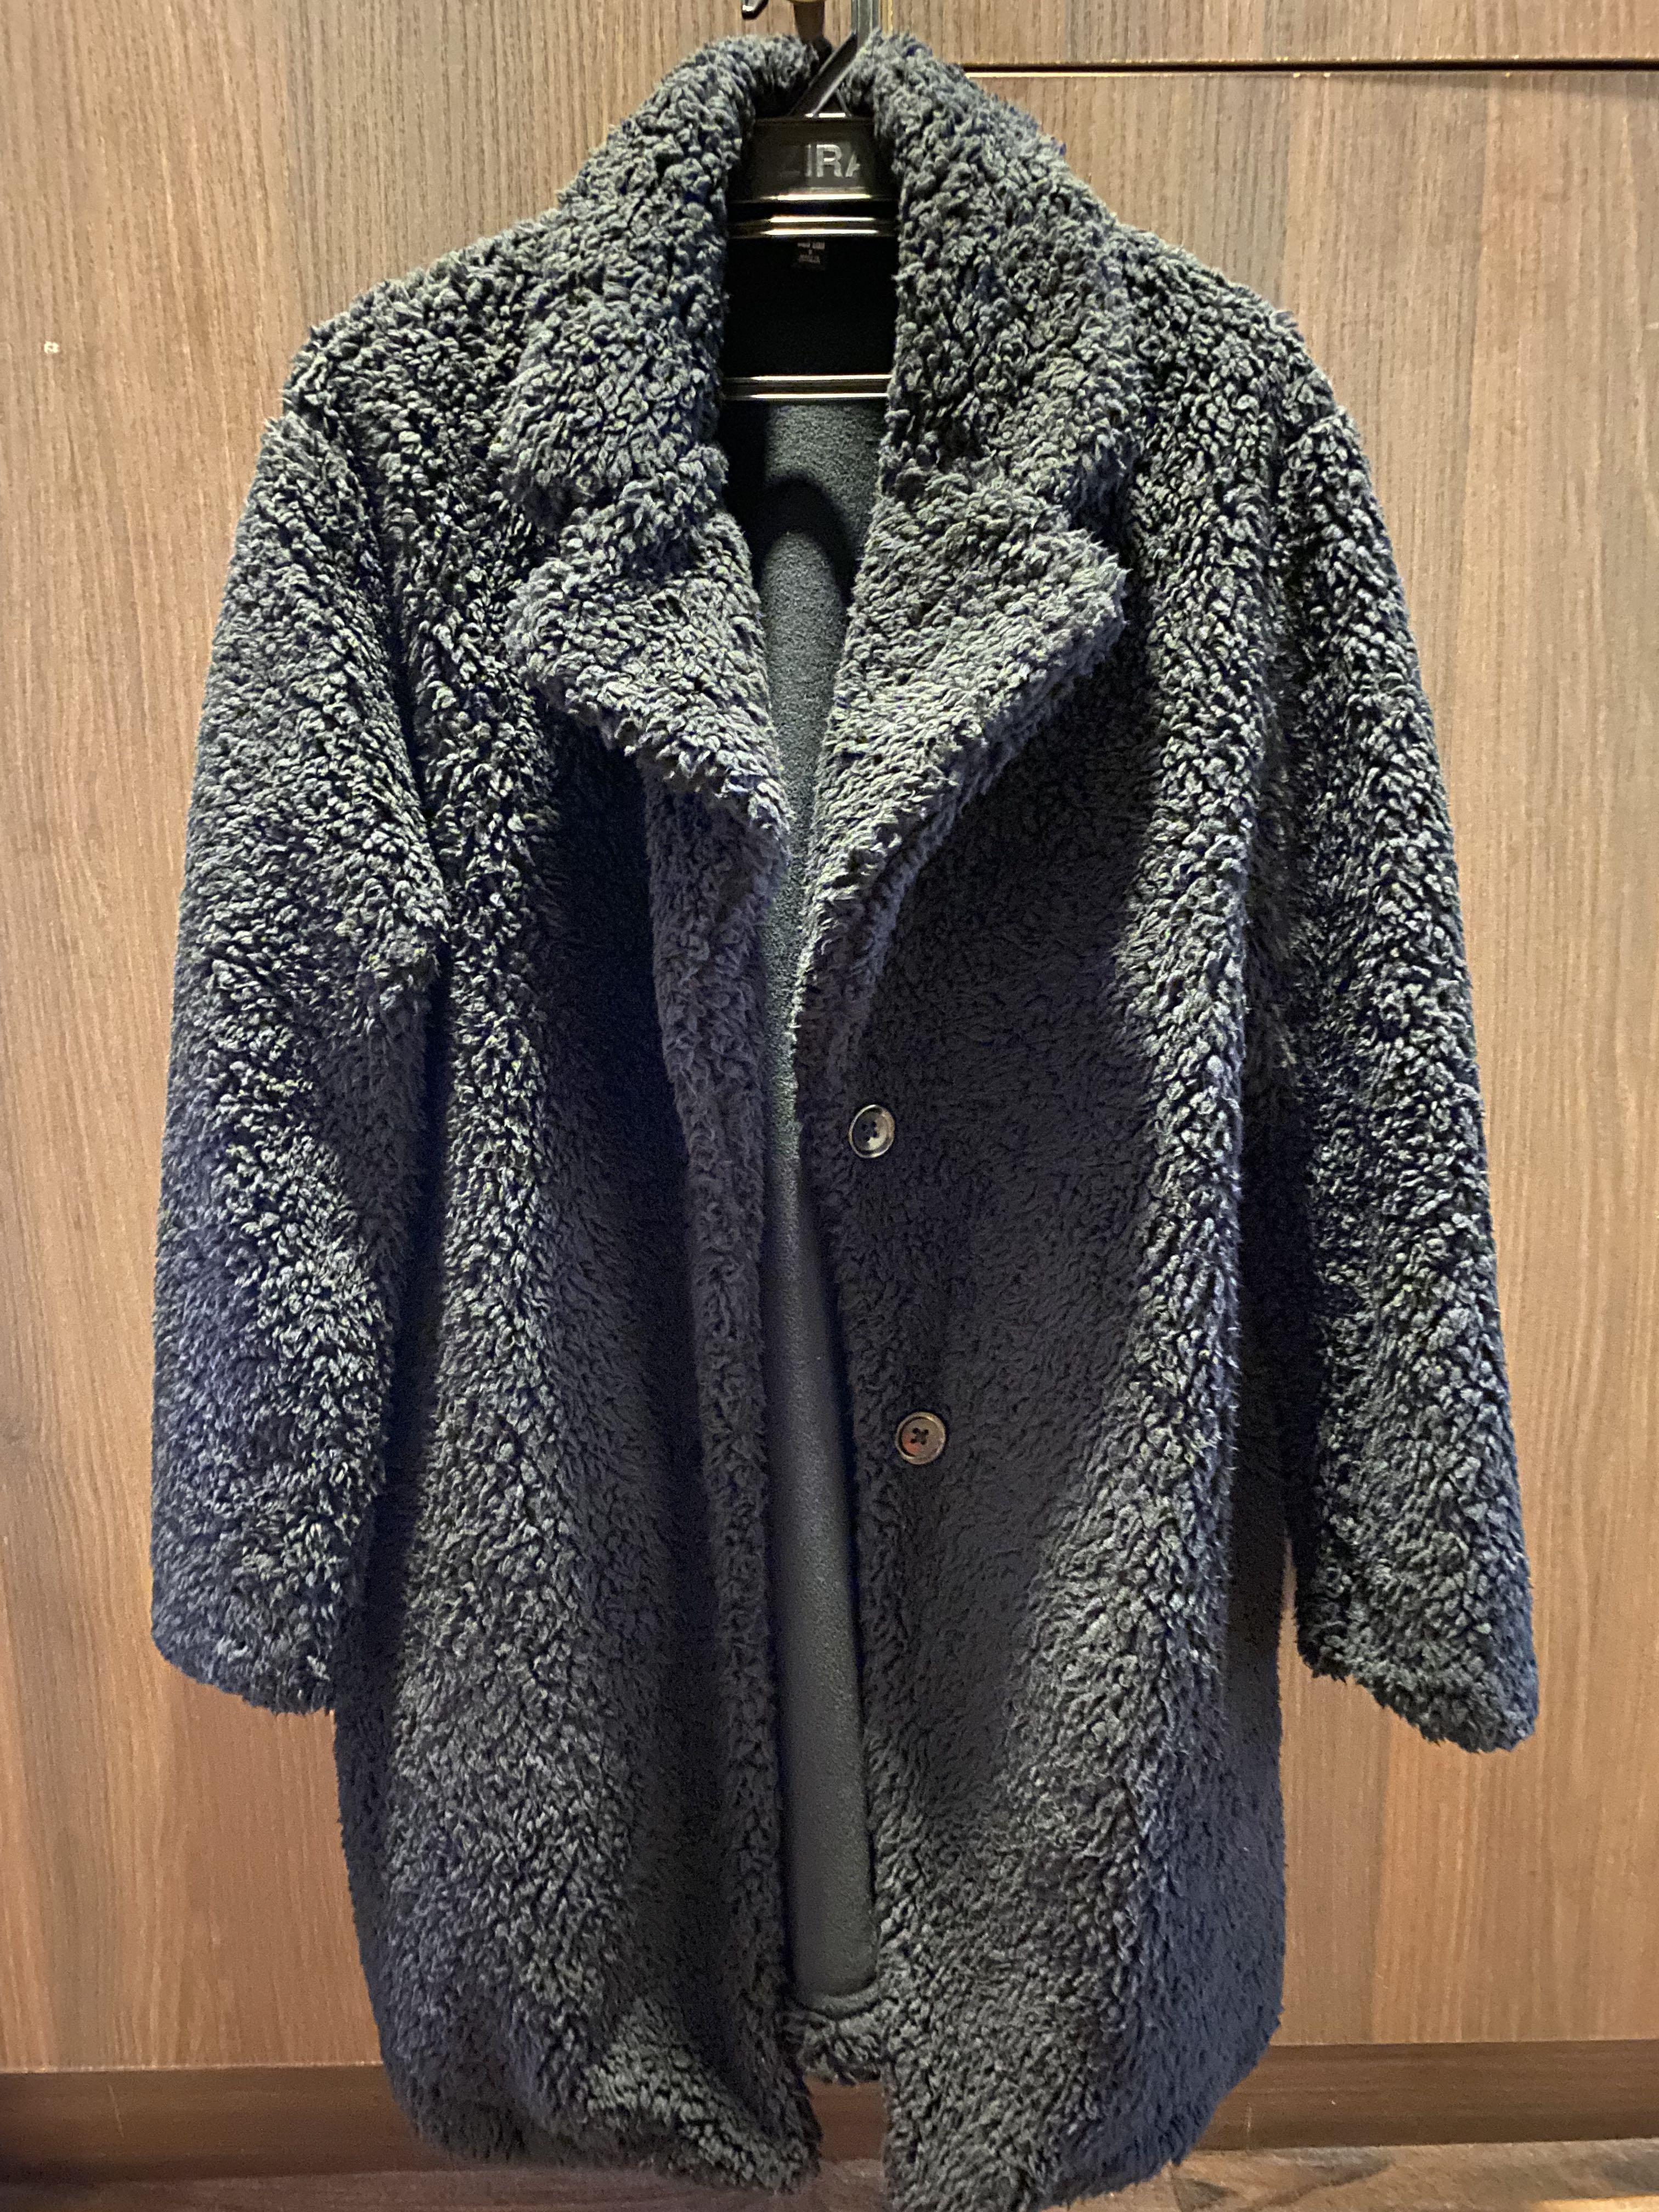 Pile-Lined Fleece Tailored Coat